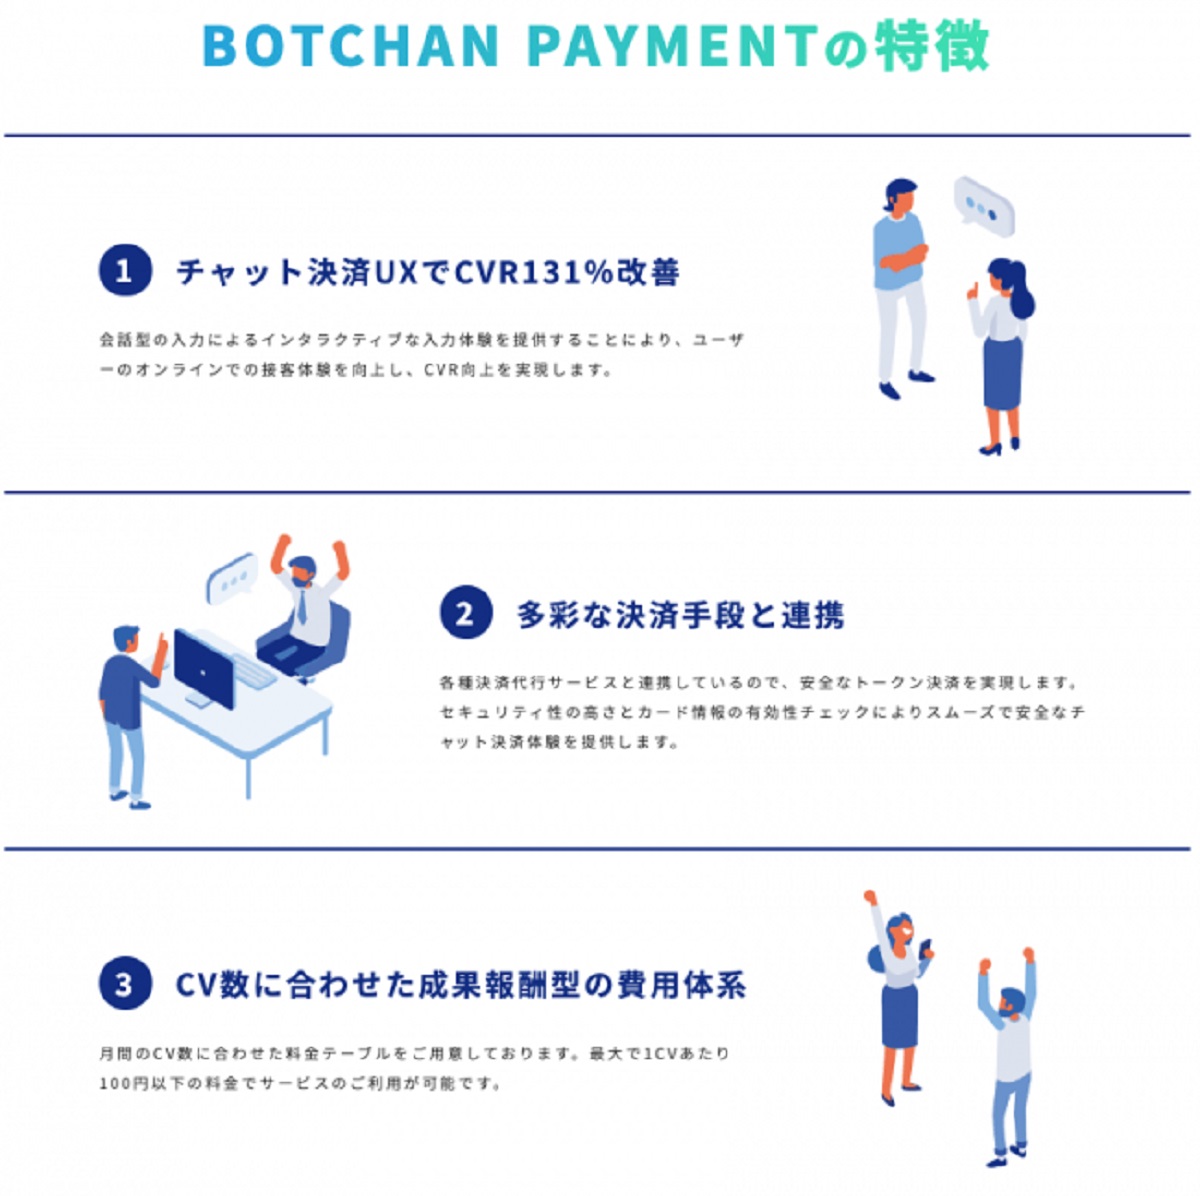 「BOTCHAN PAYMENT」の特徴と概要